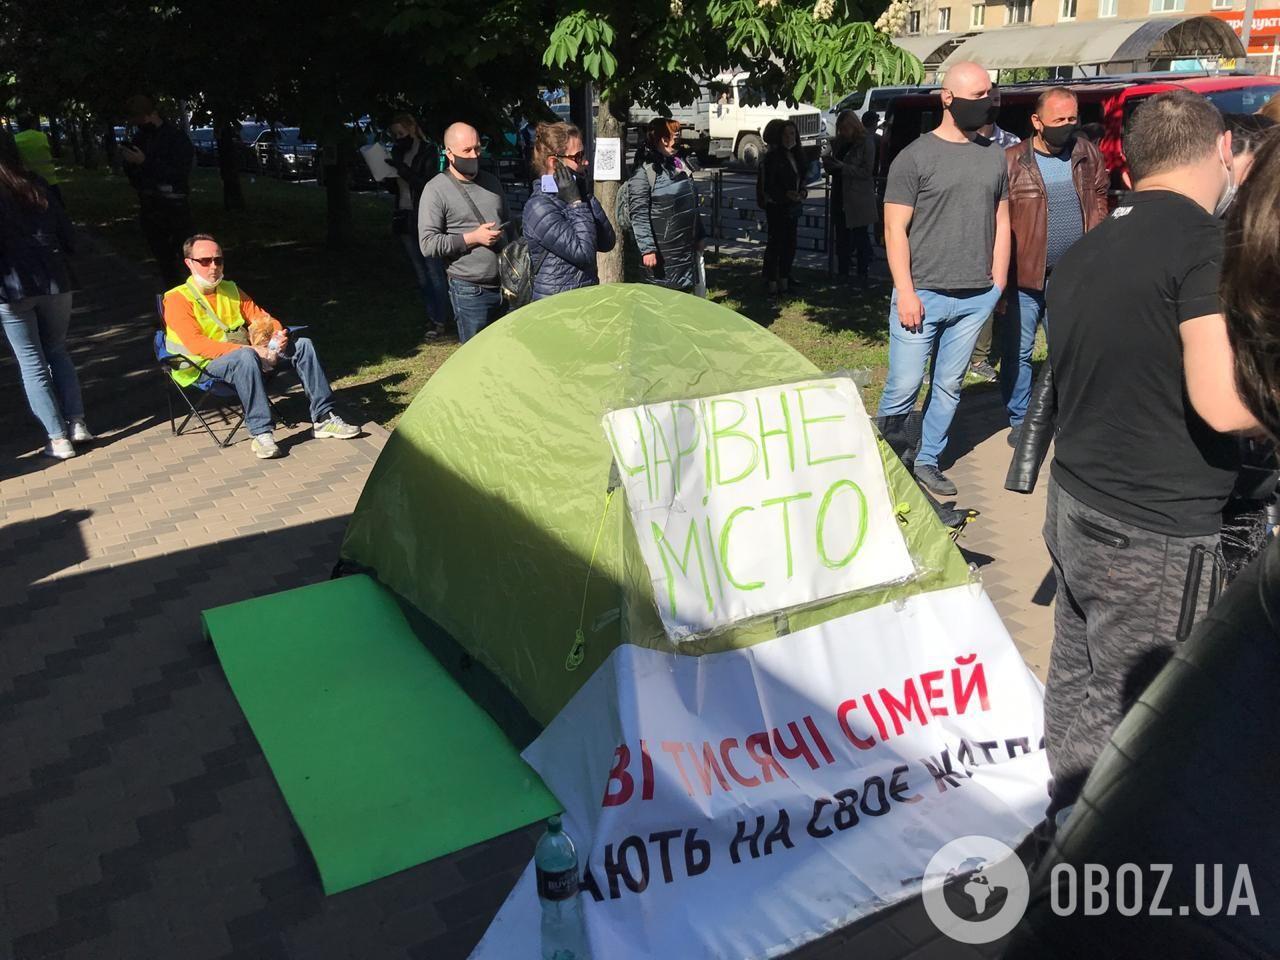 Участники митинга установили палатку